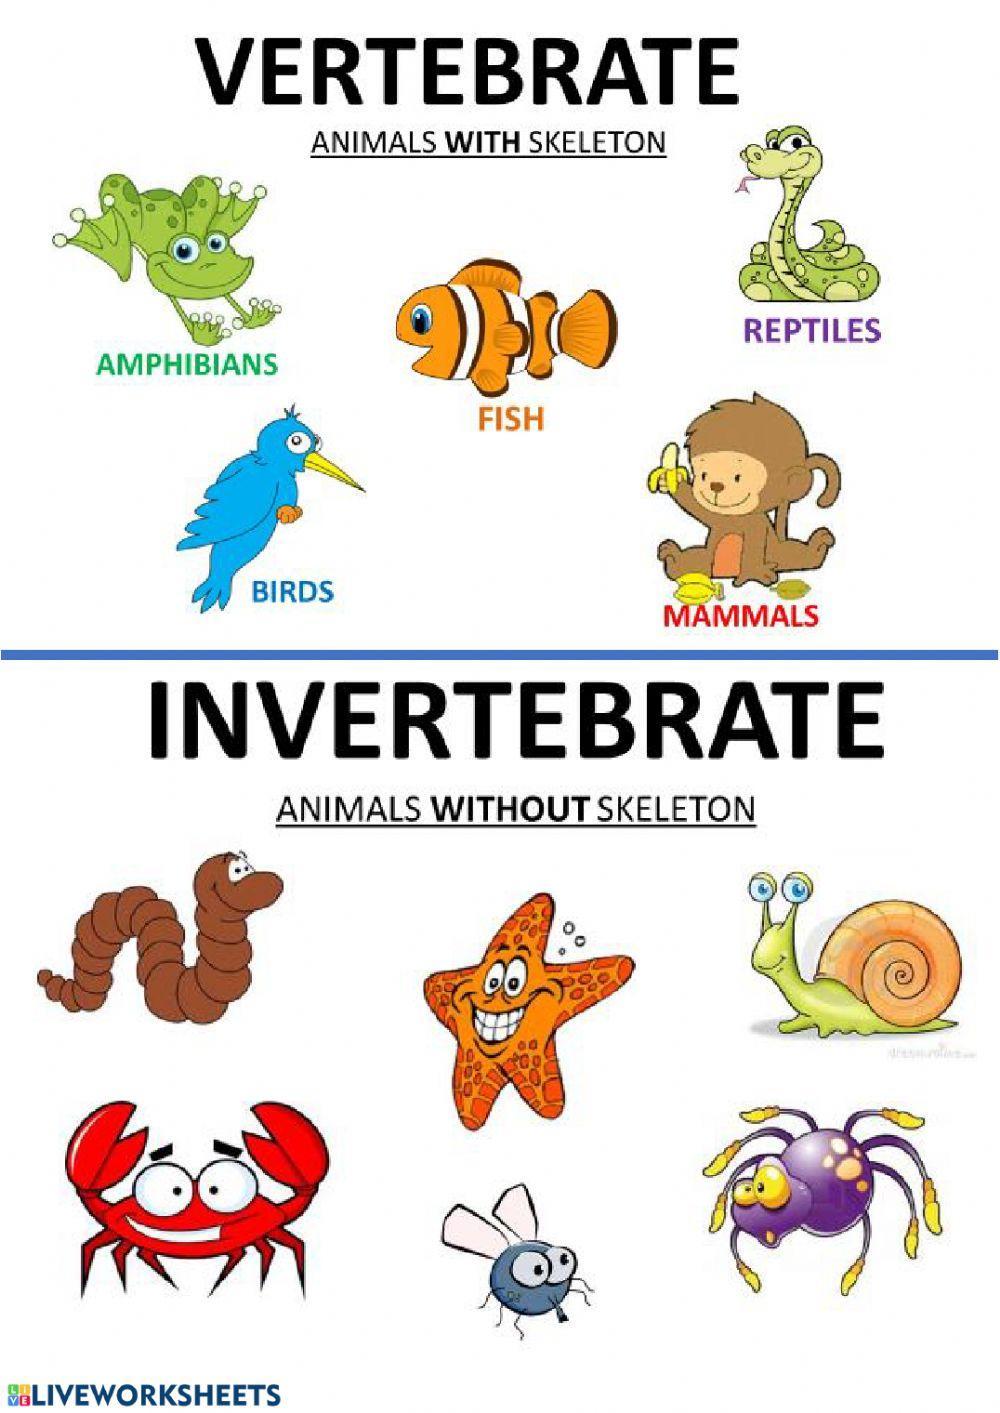 Vertebrate, invertebrate